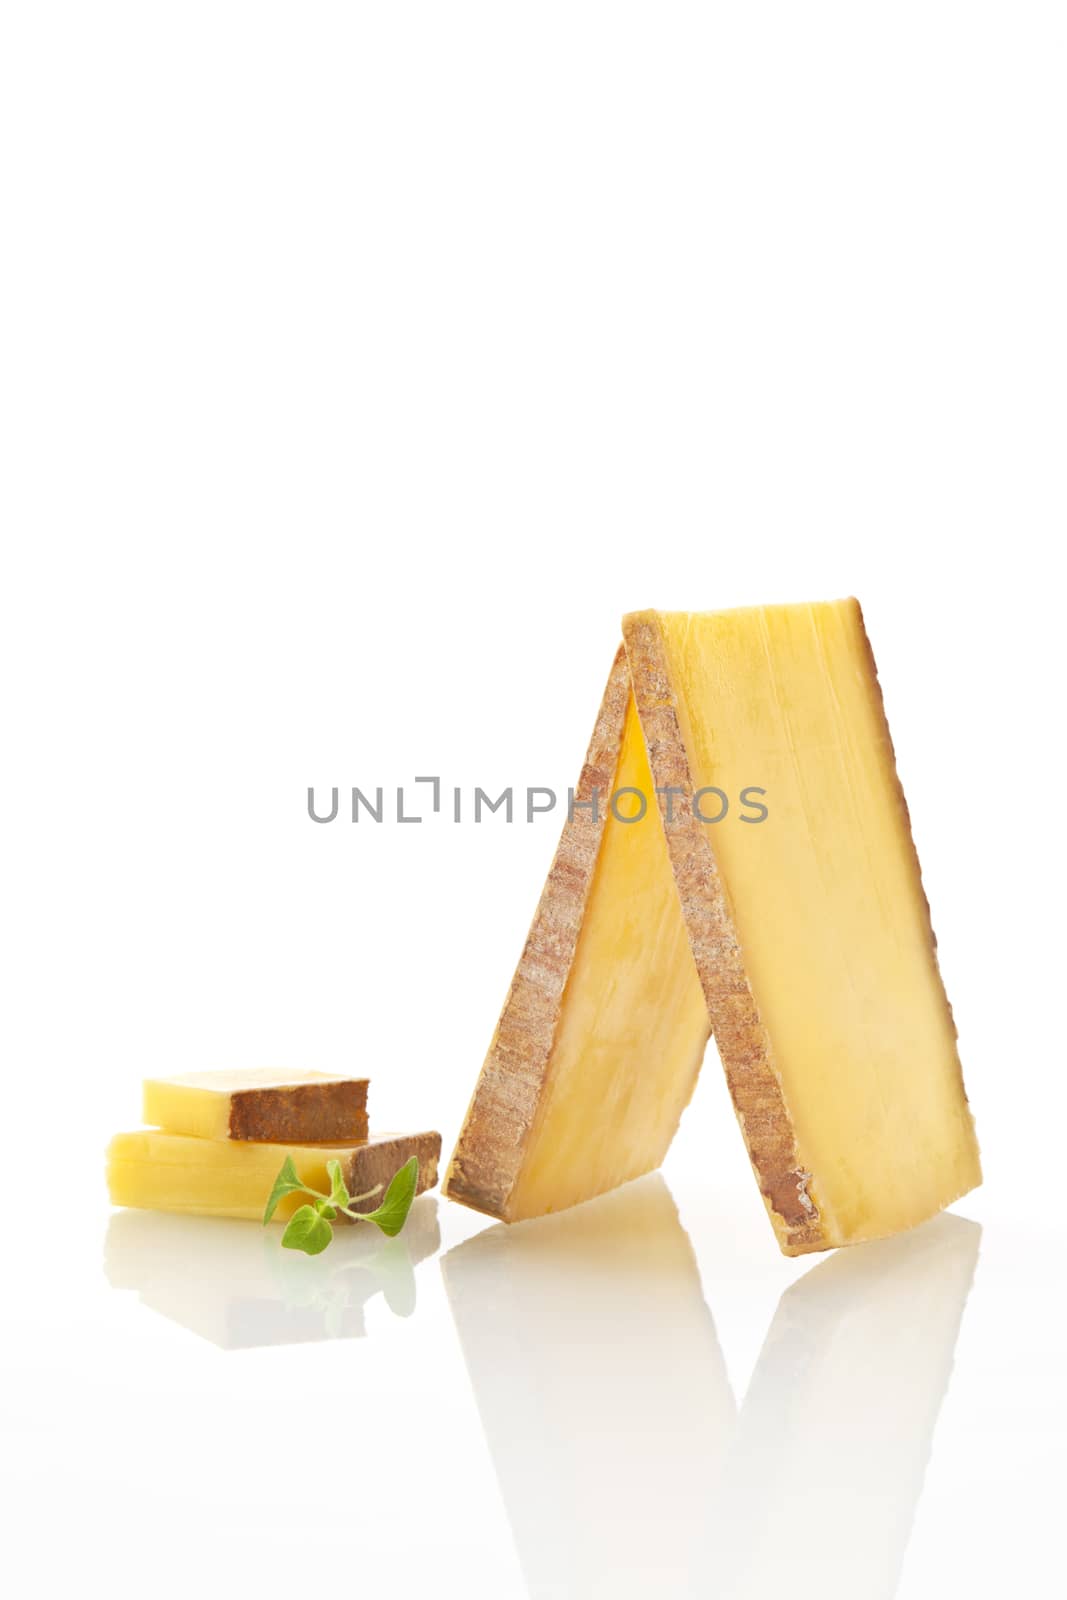 Luxurious cheese arranged on white background.